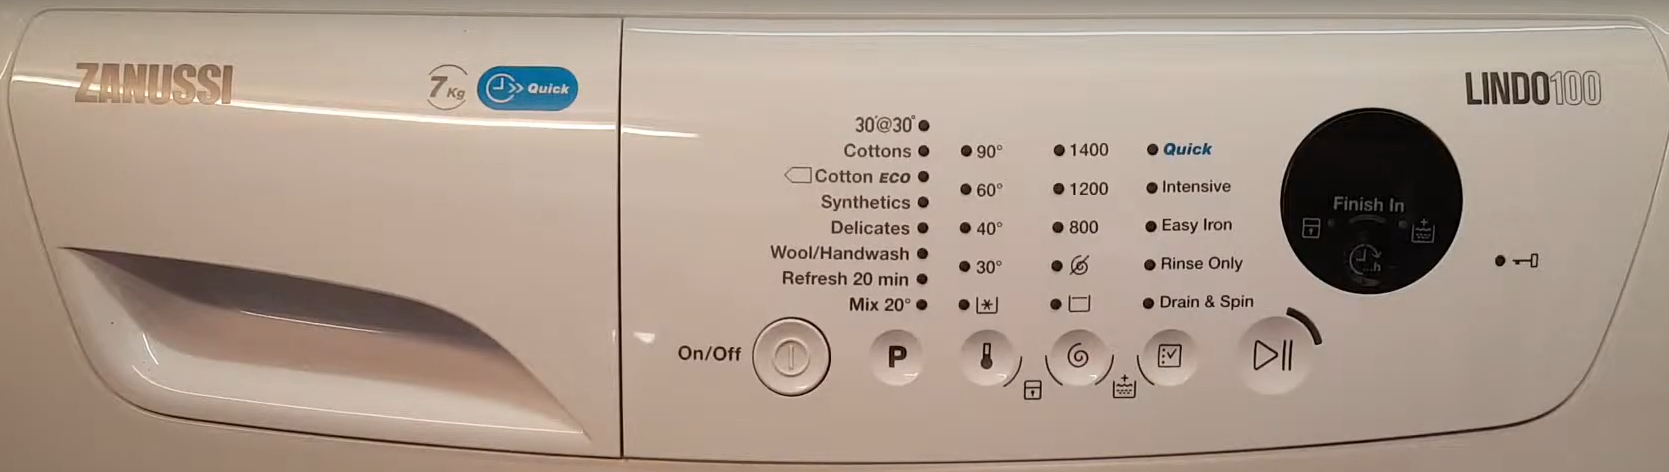 Zanussi Washing Machine with control panel